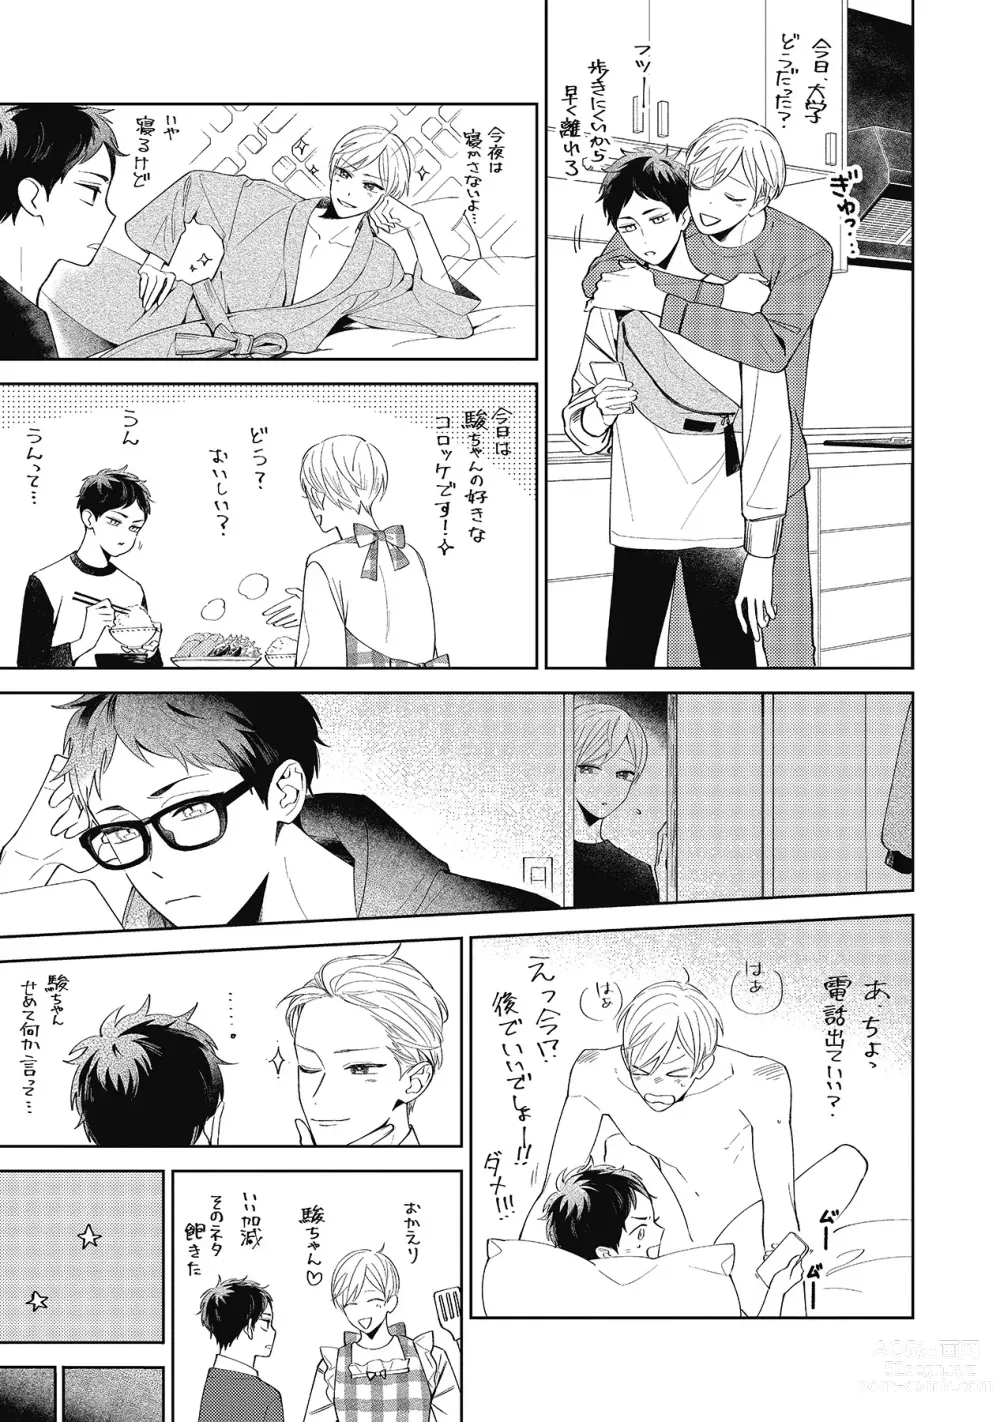 Page 19 of manga Sentimental Darling